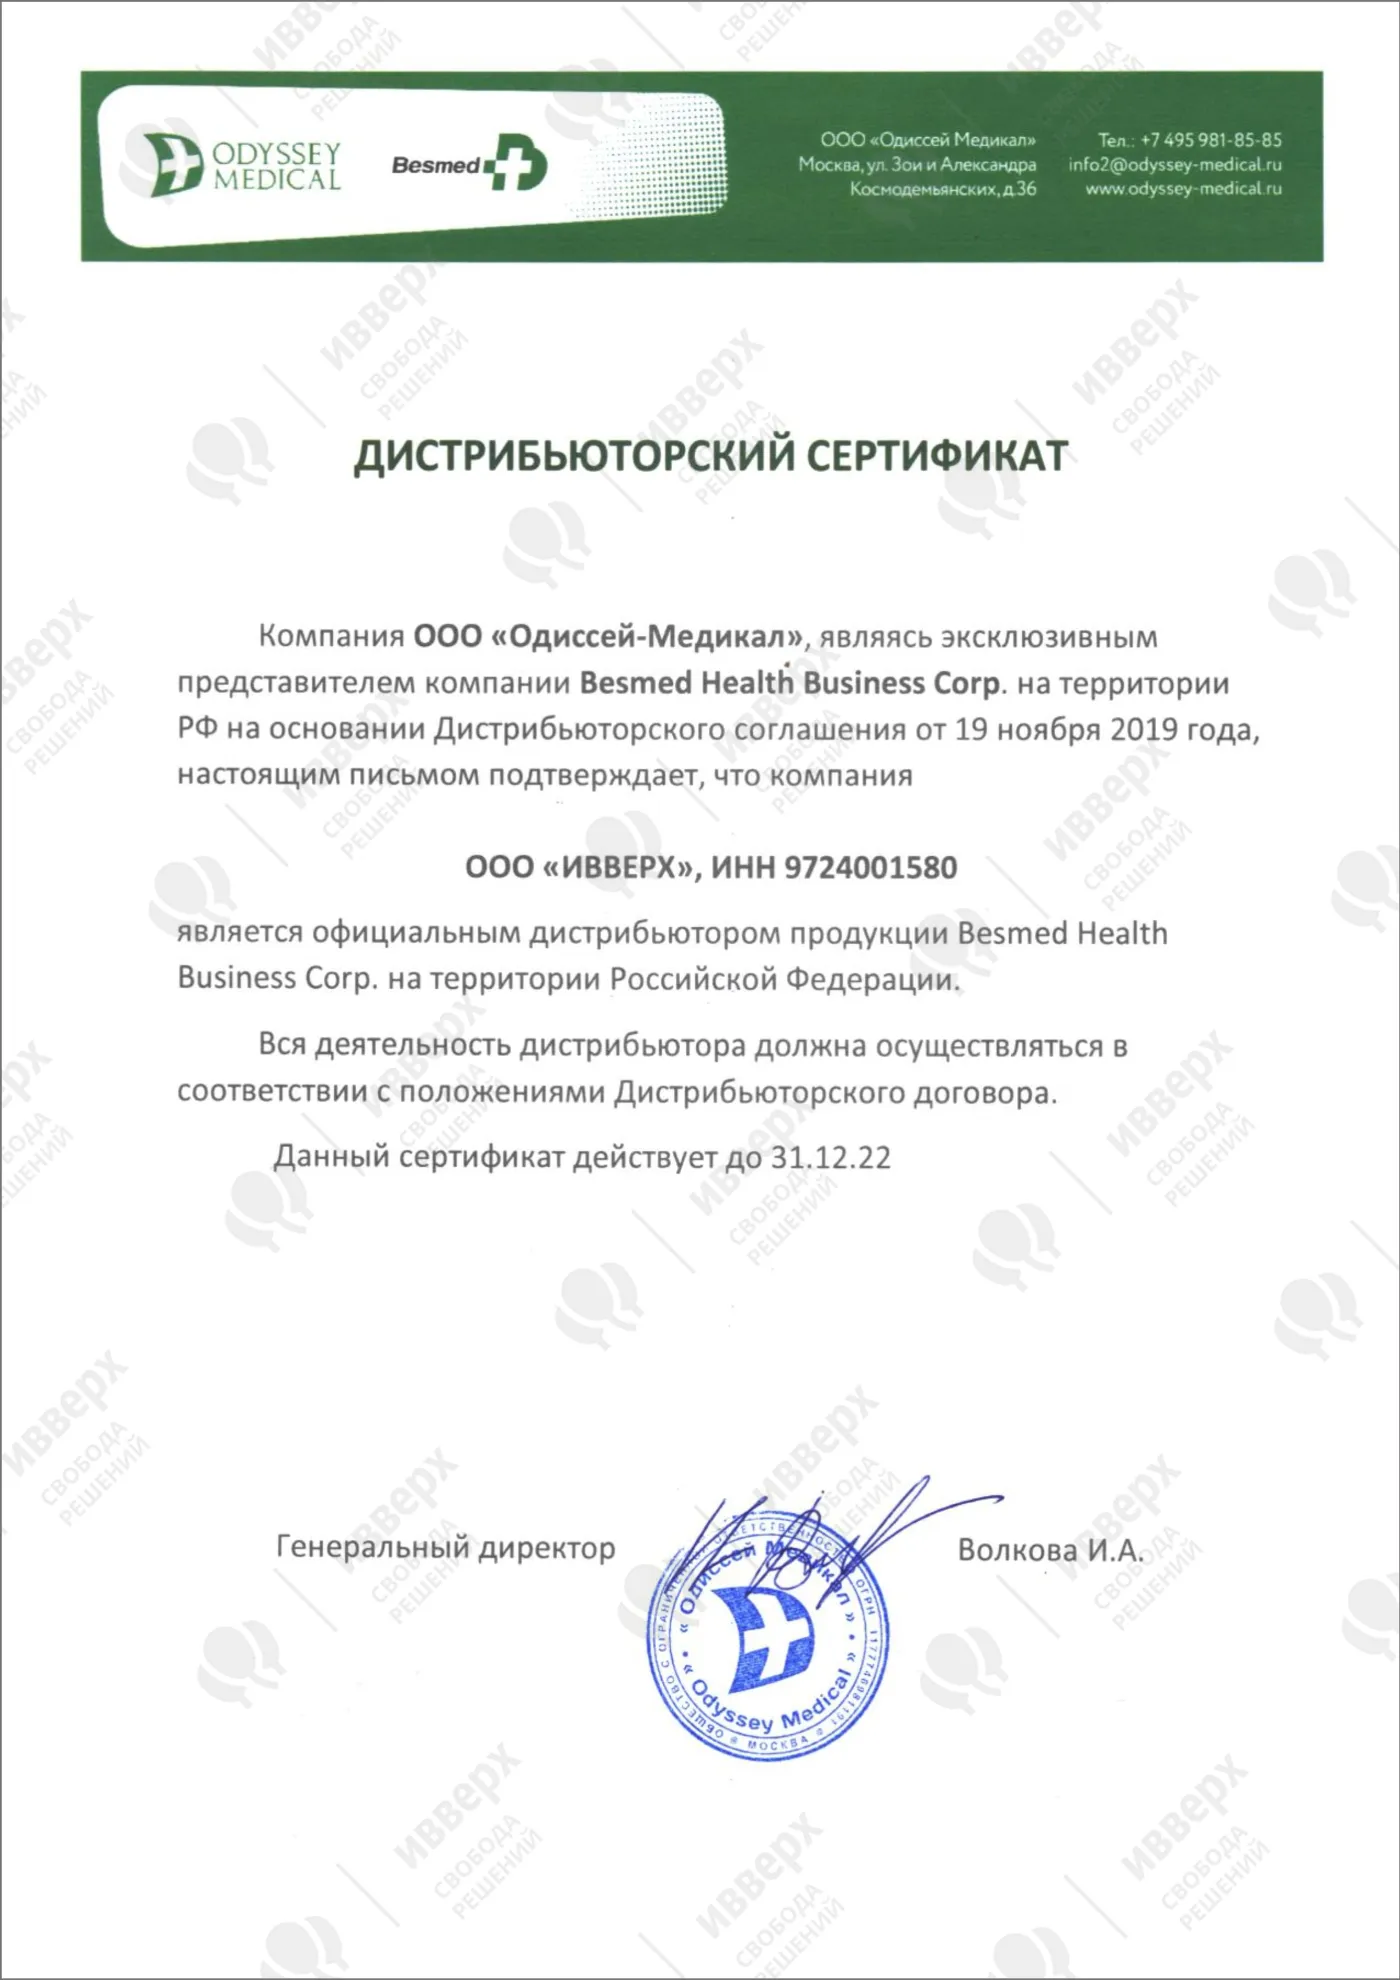 дистрибьюторский сертификат Besmed